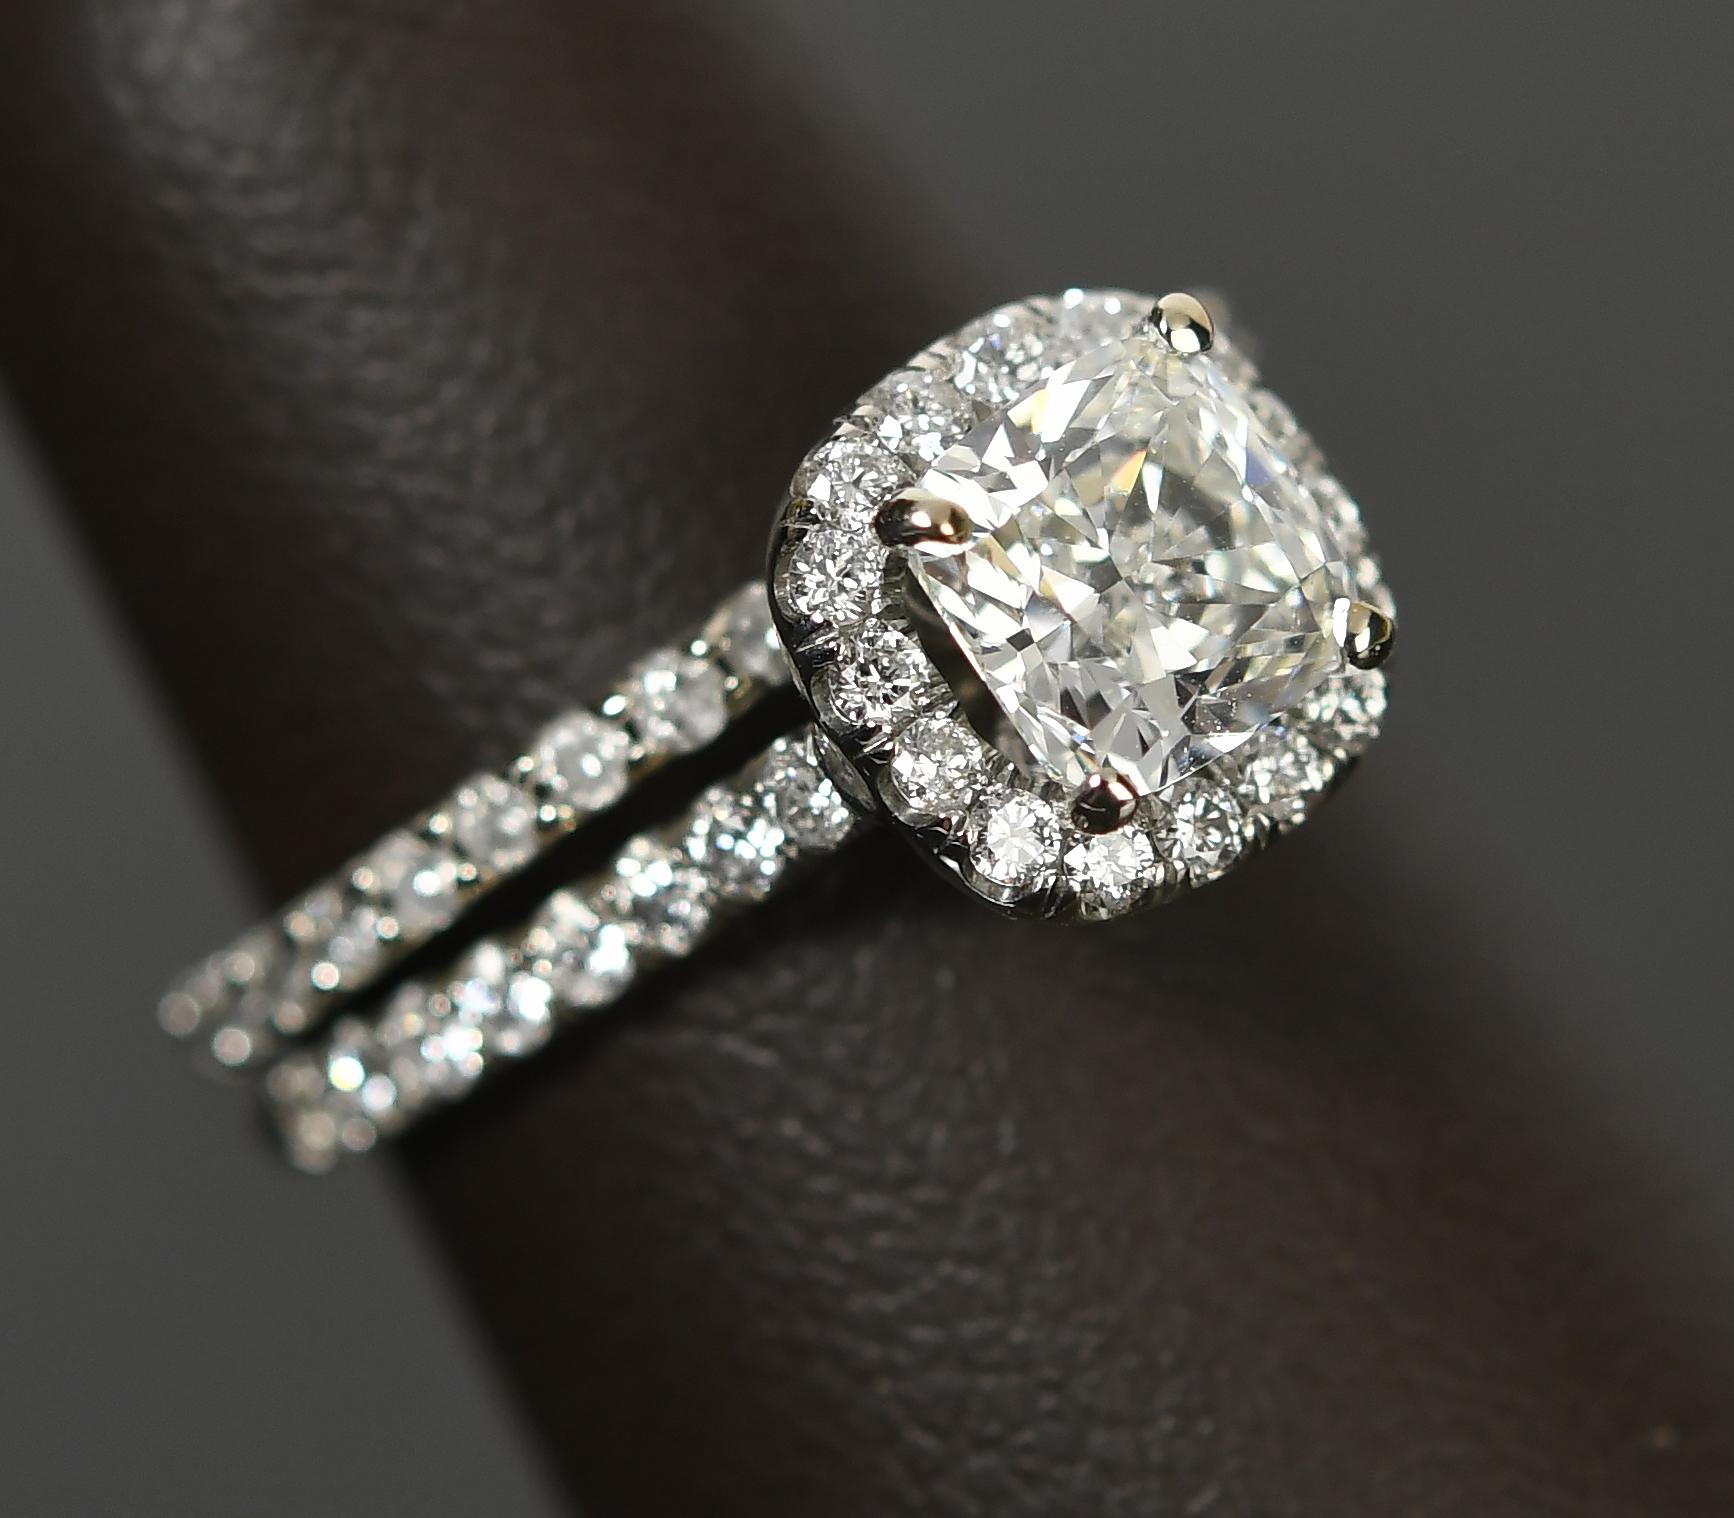 Cushion Cut Estate Diamond Engagement/Wedding Band GIA Certed 1.06ct VVS2 J Color Center! For Sale